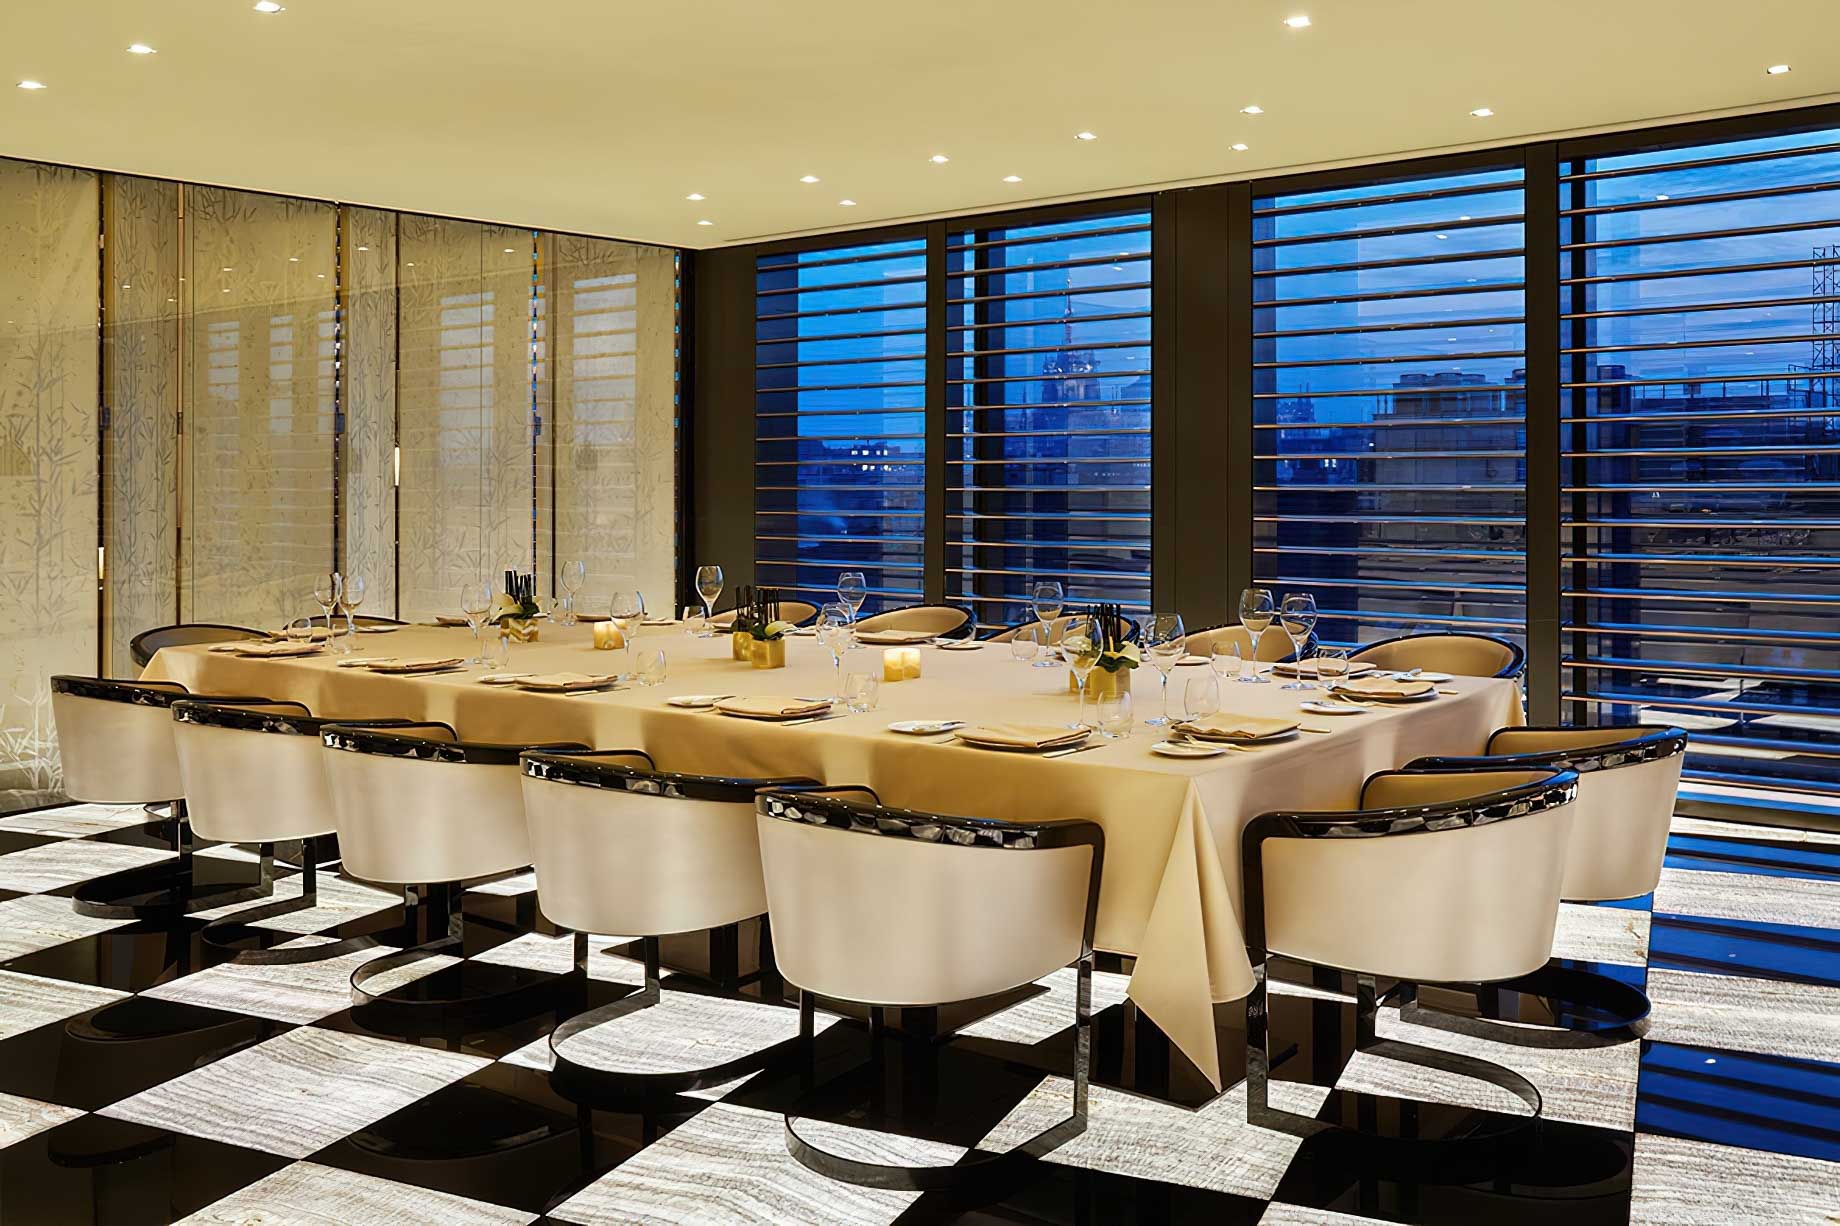 110 – Armani Hotel Milano – Milan, Italy – Armani Restaurant Table Seating Evening